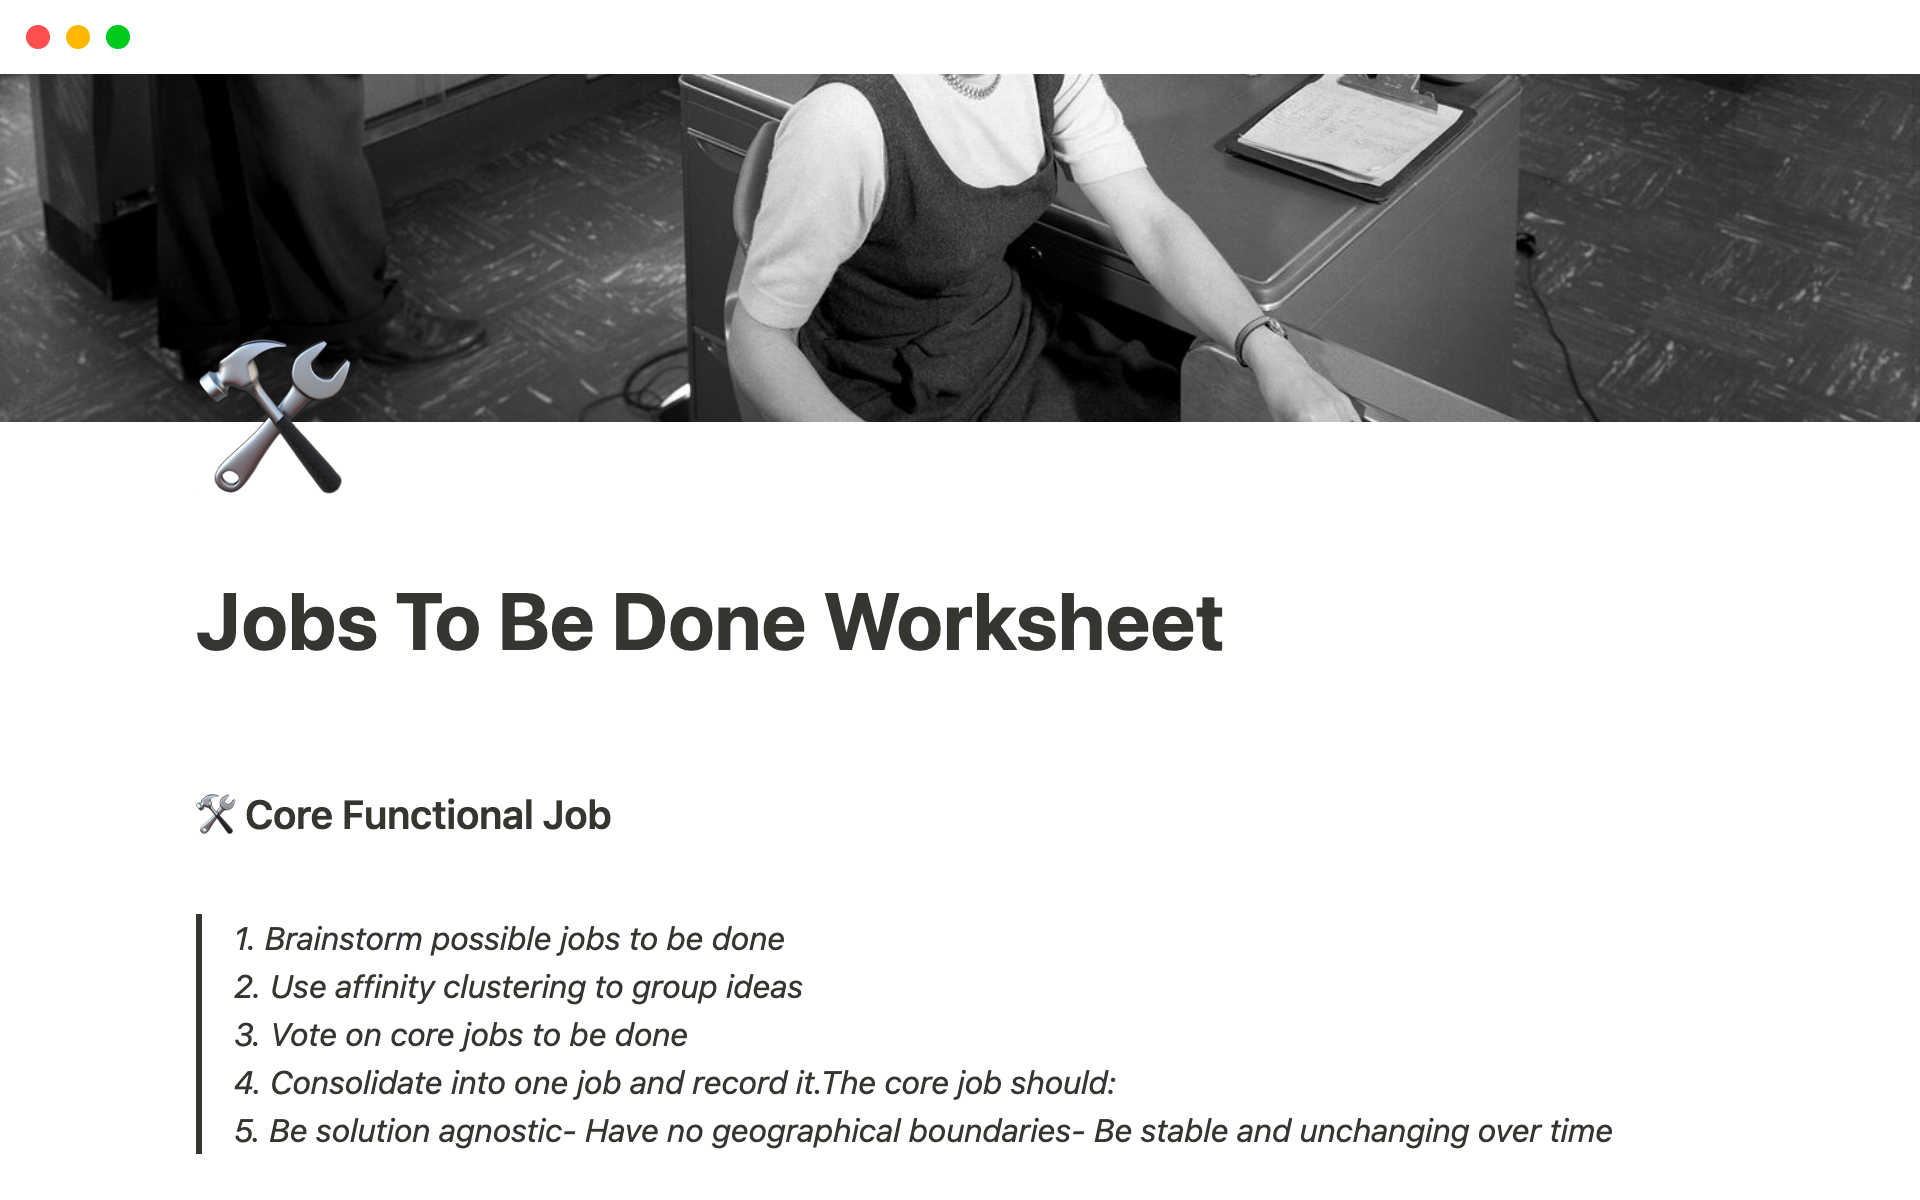 Aperçu du modèle de Jobs To Be Done Worksheet